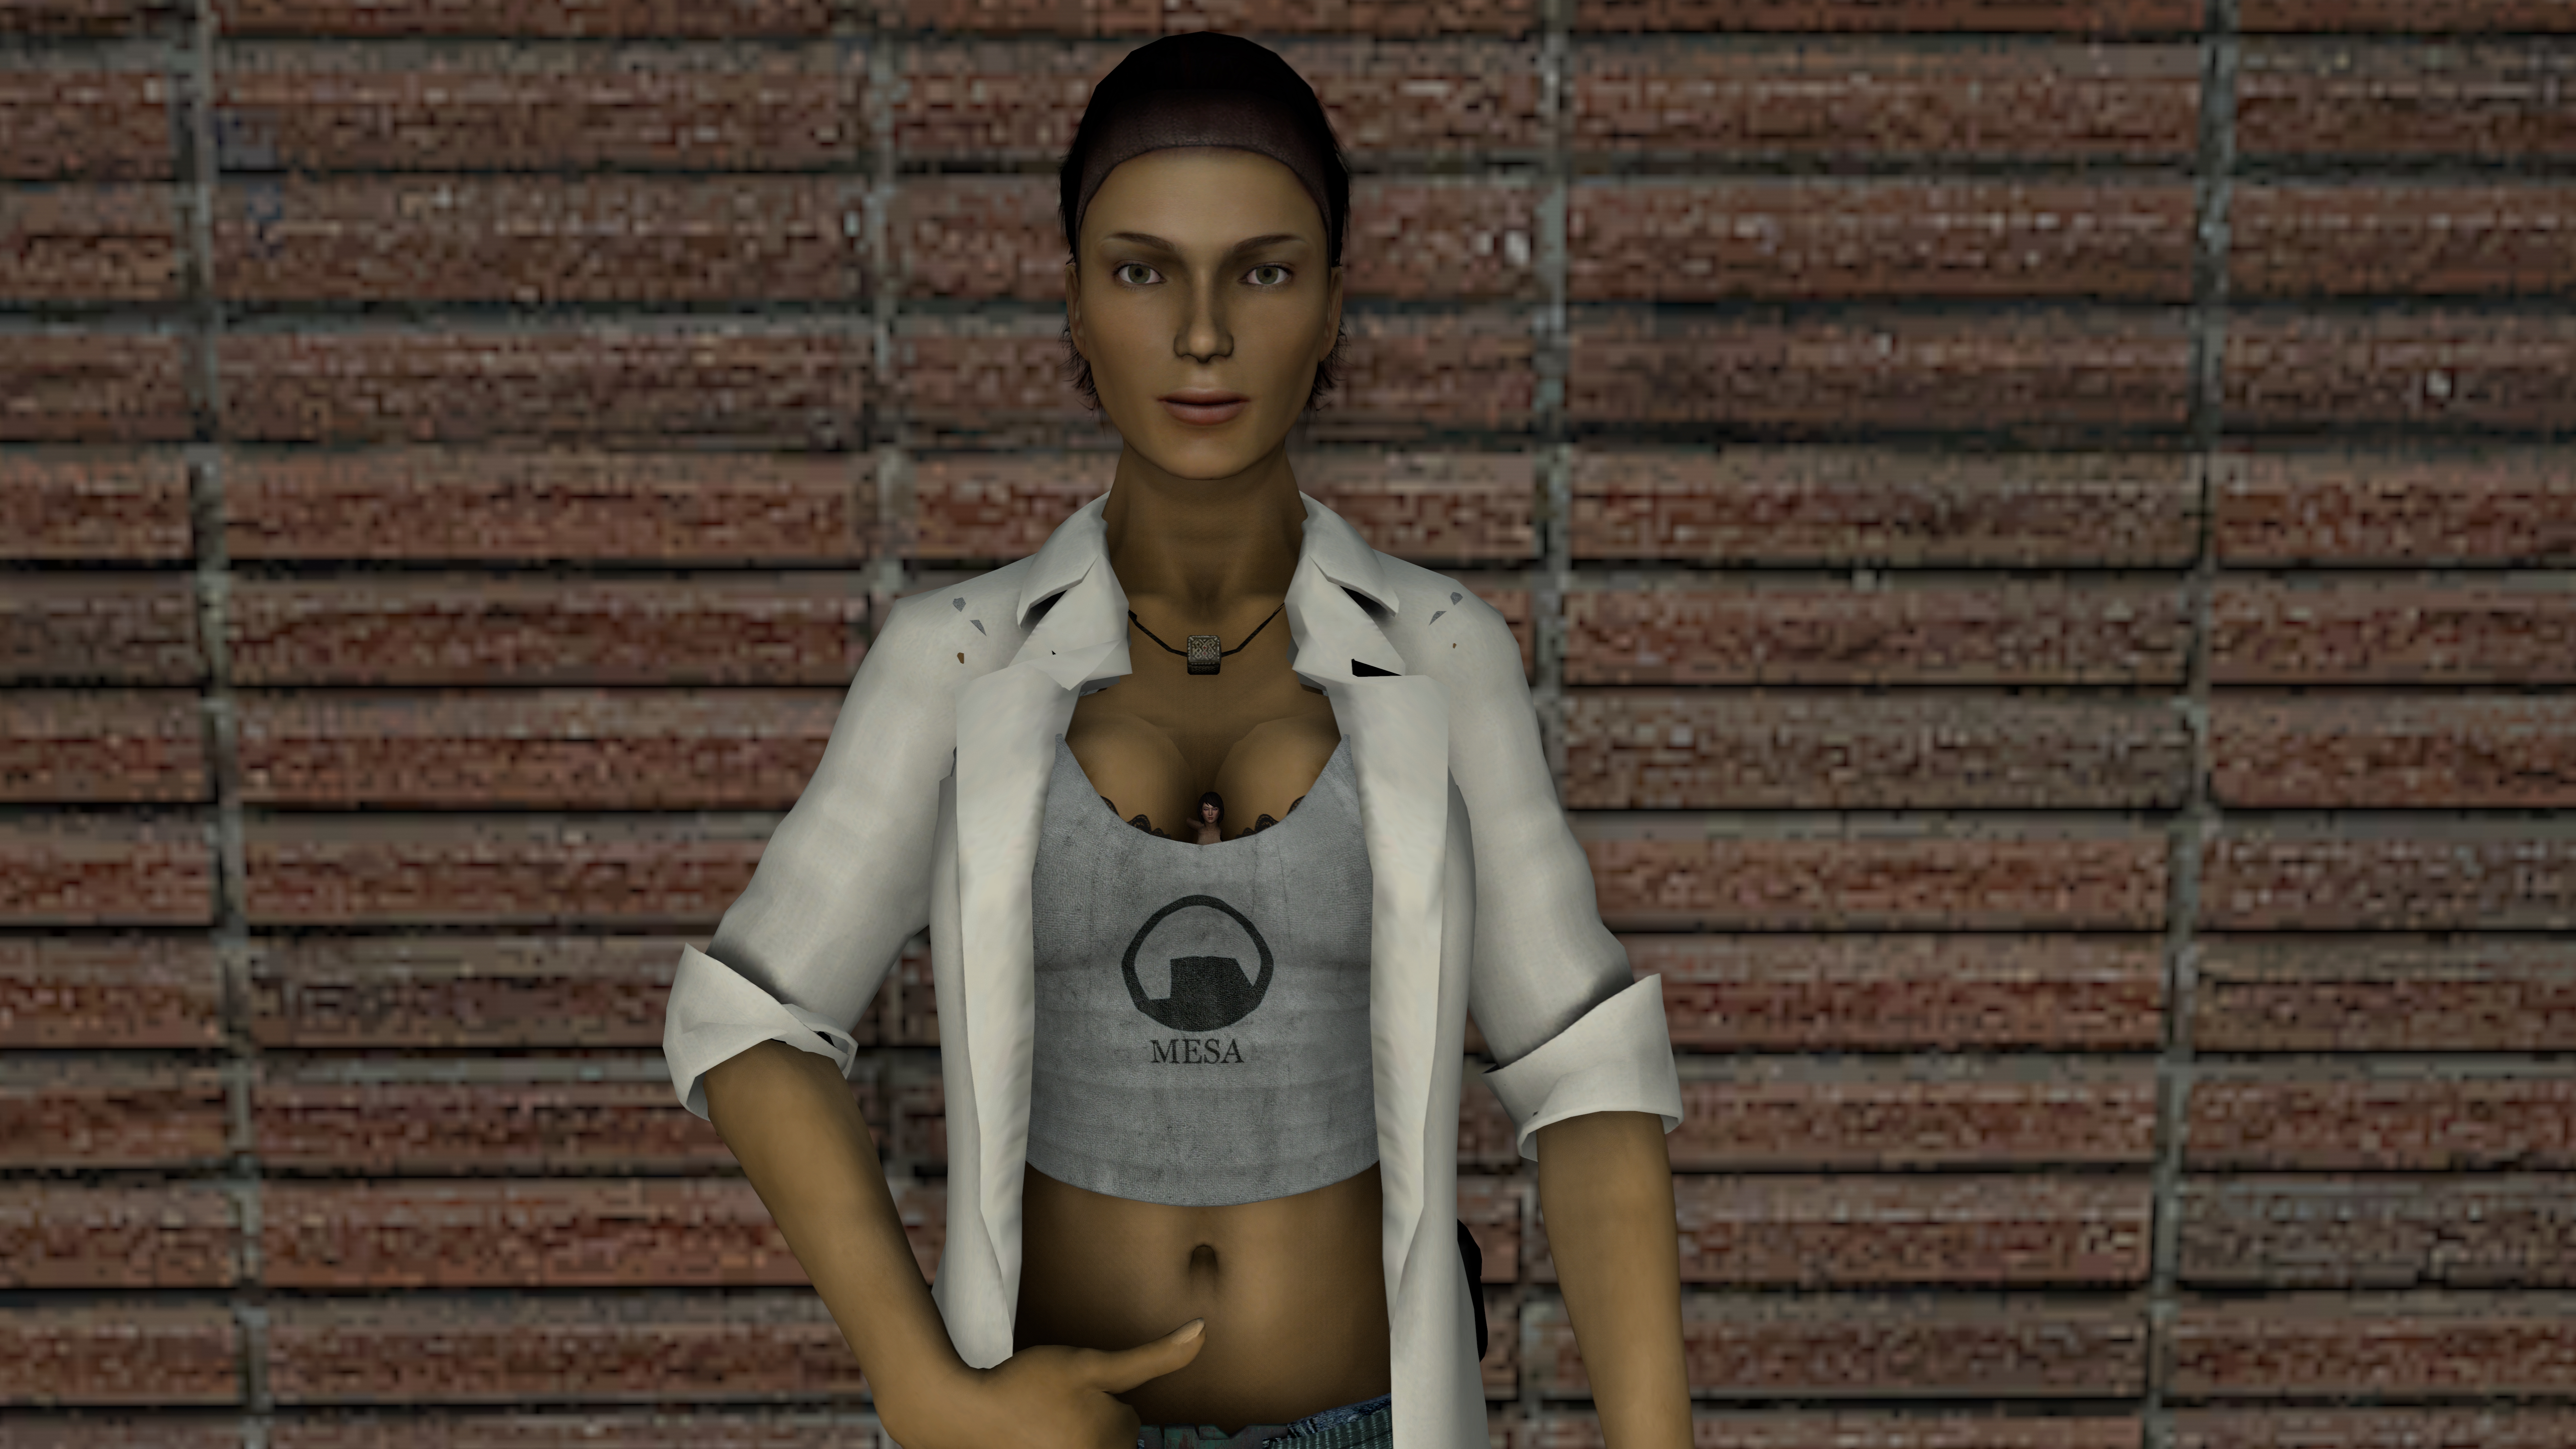 Half Life 1/6 scale Alyx Vance figure by botmaster2005 on DeviantArt